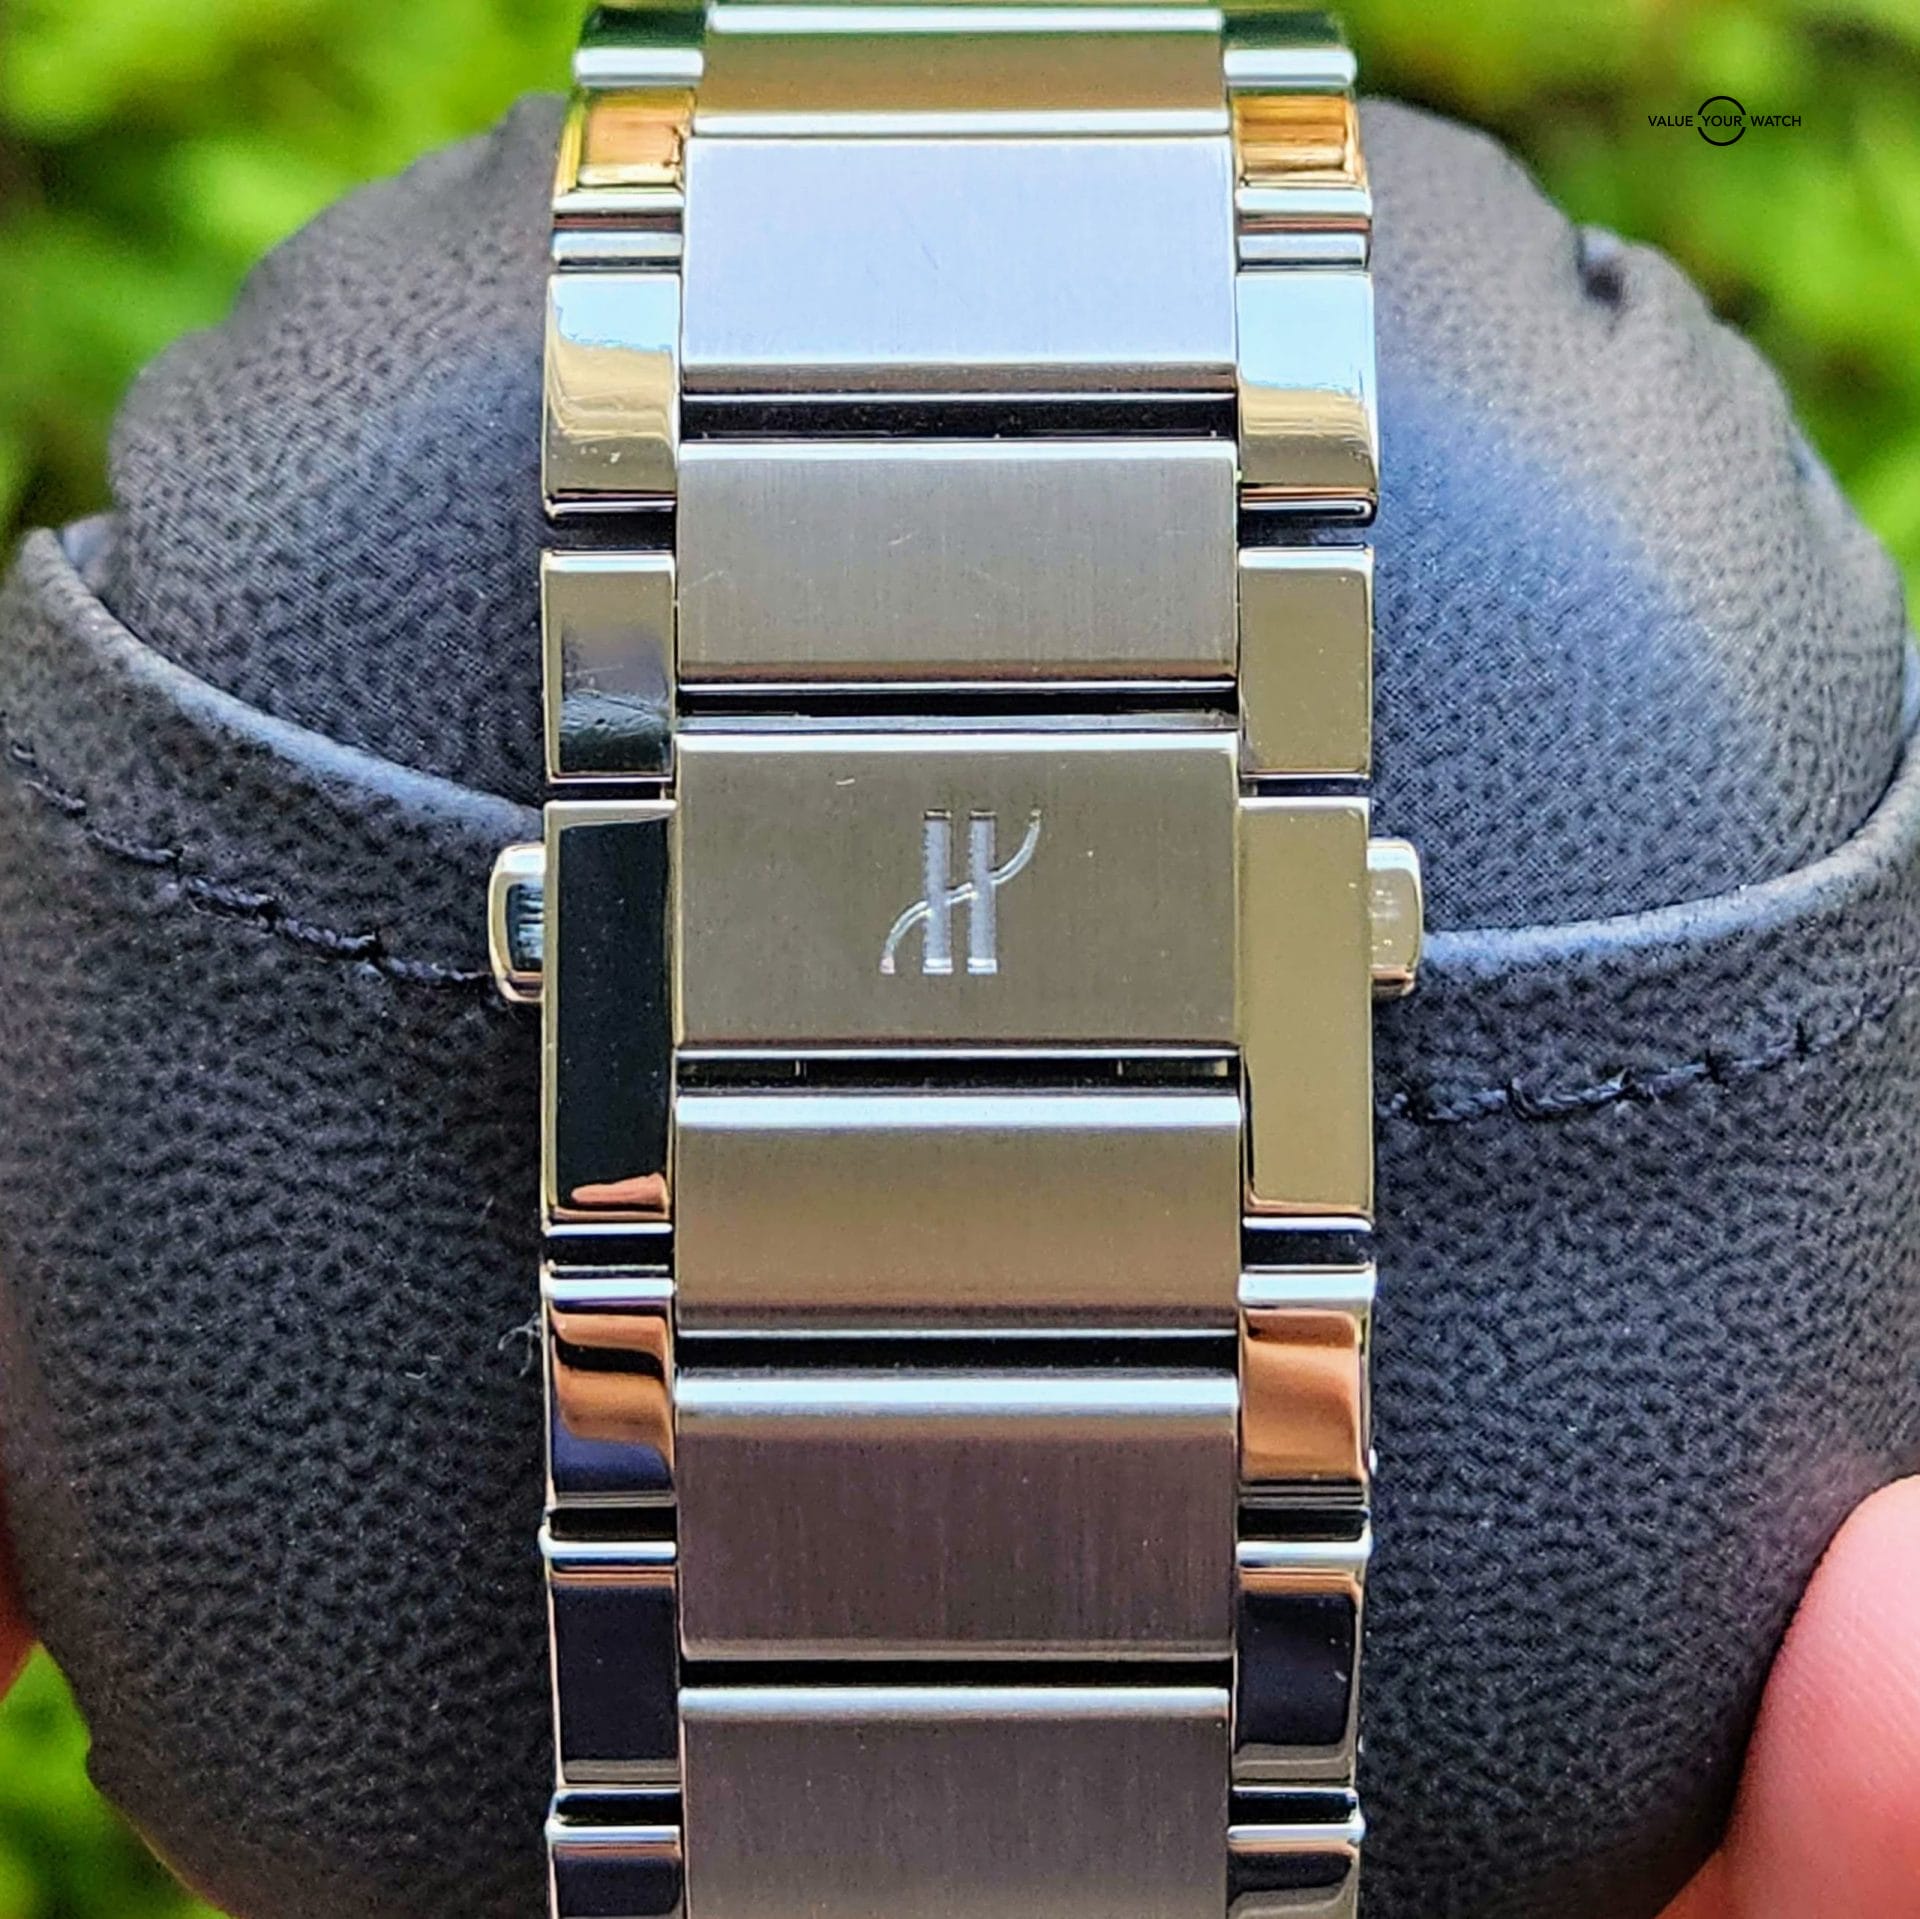 Hublot Classic Fusion Ultra-Thin Watches From SwissLuxury